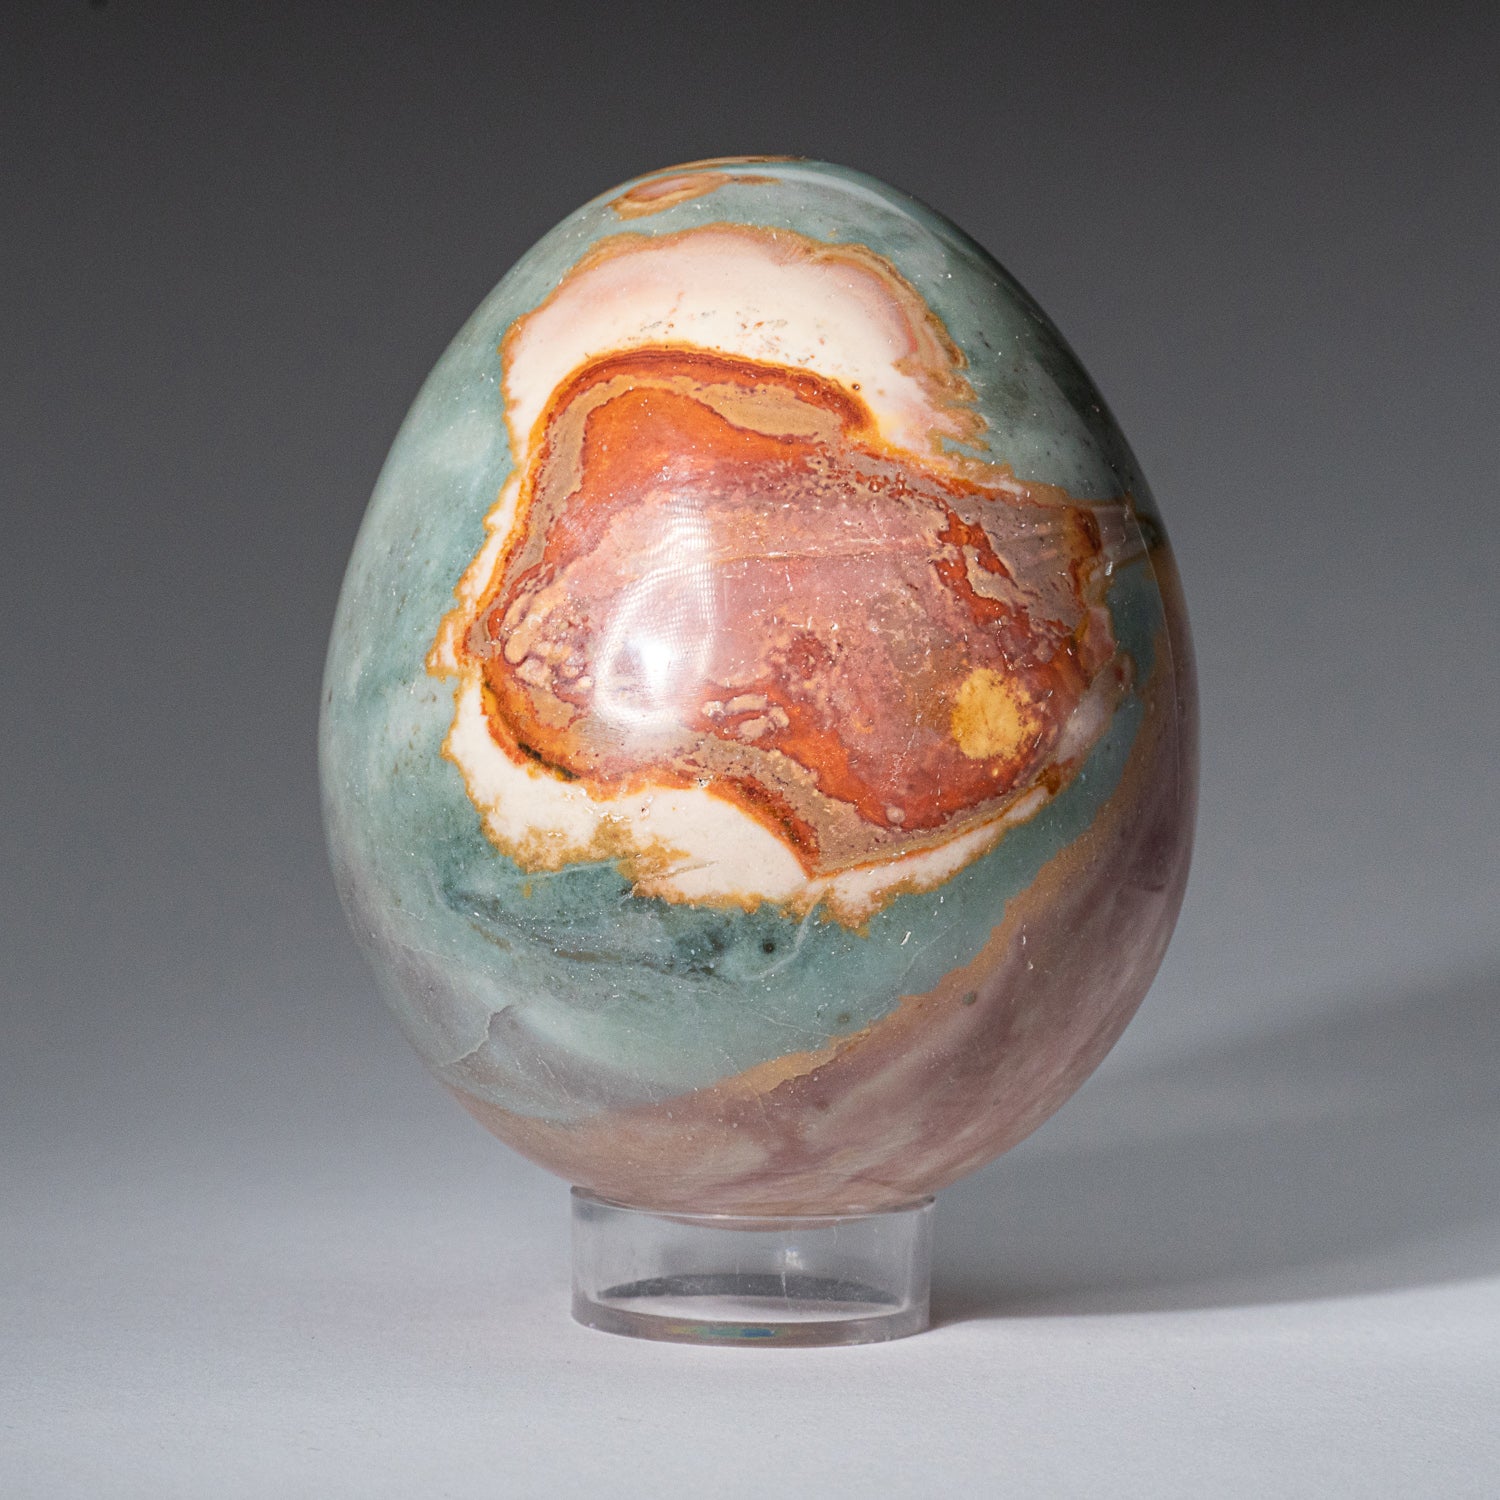 Genuine Polished Polychrome Egg from Madagascar (1.6 lbs)